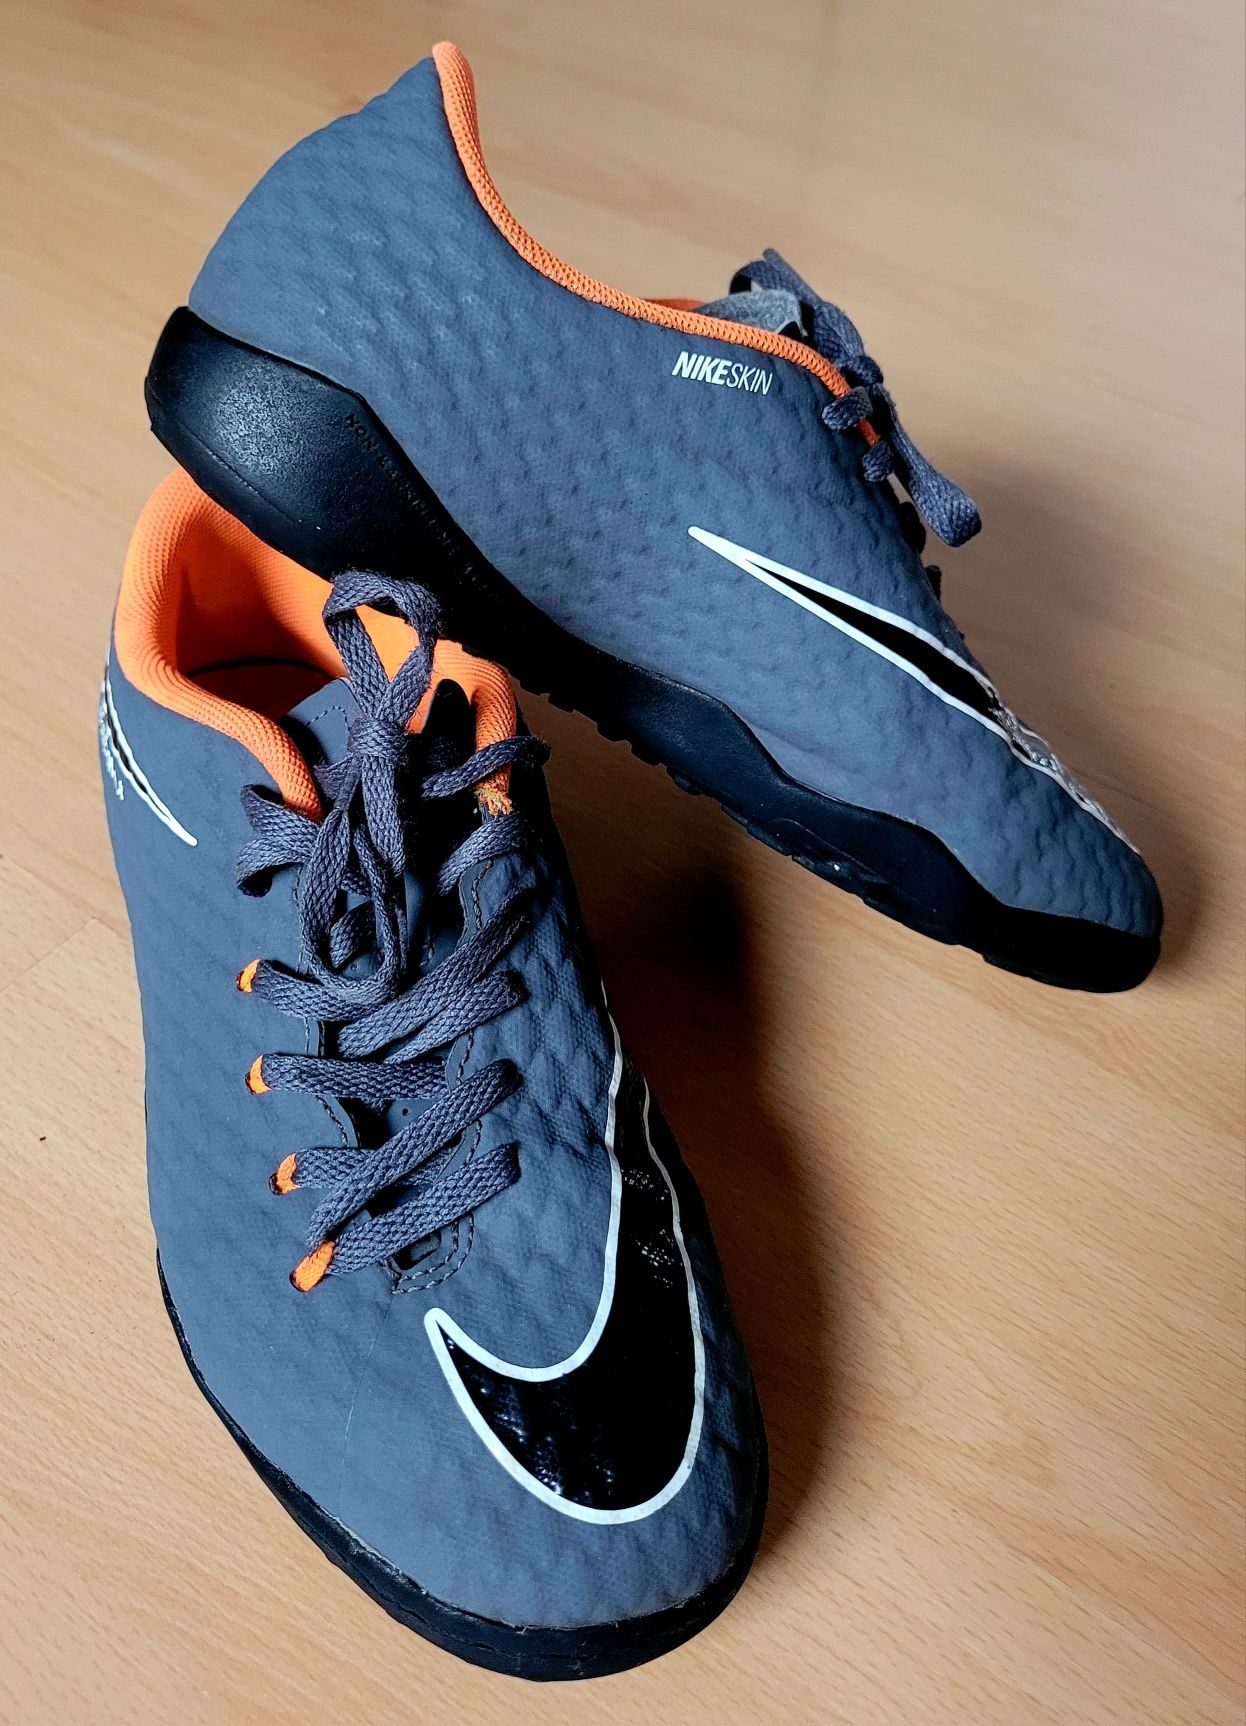 Buty piłkarskie, turfy Nike Hypervenom X r.38, 24 cm